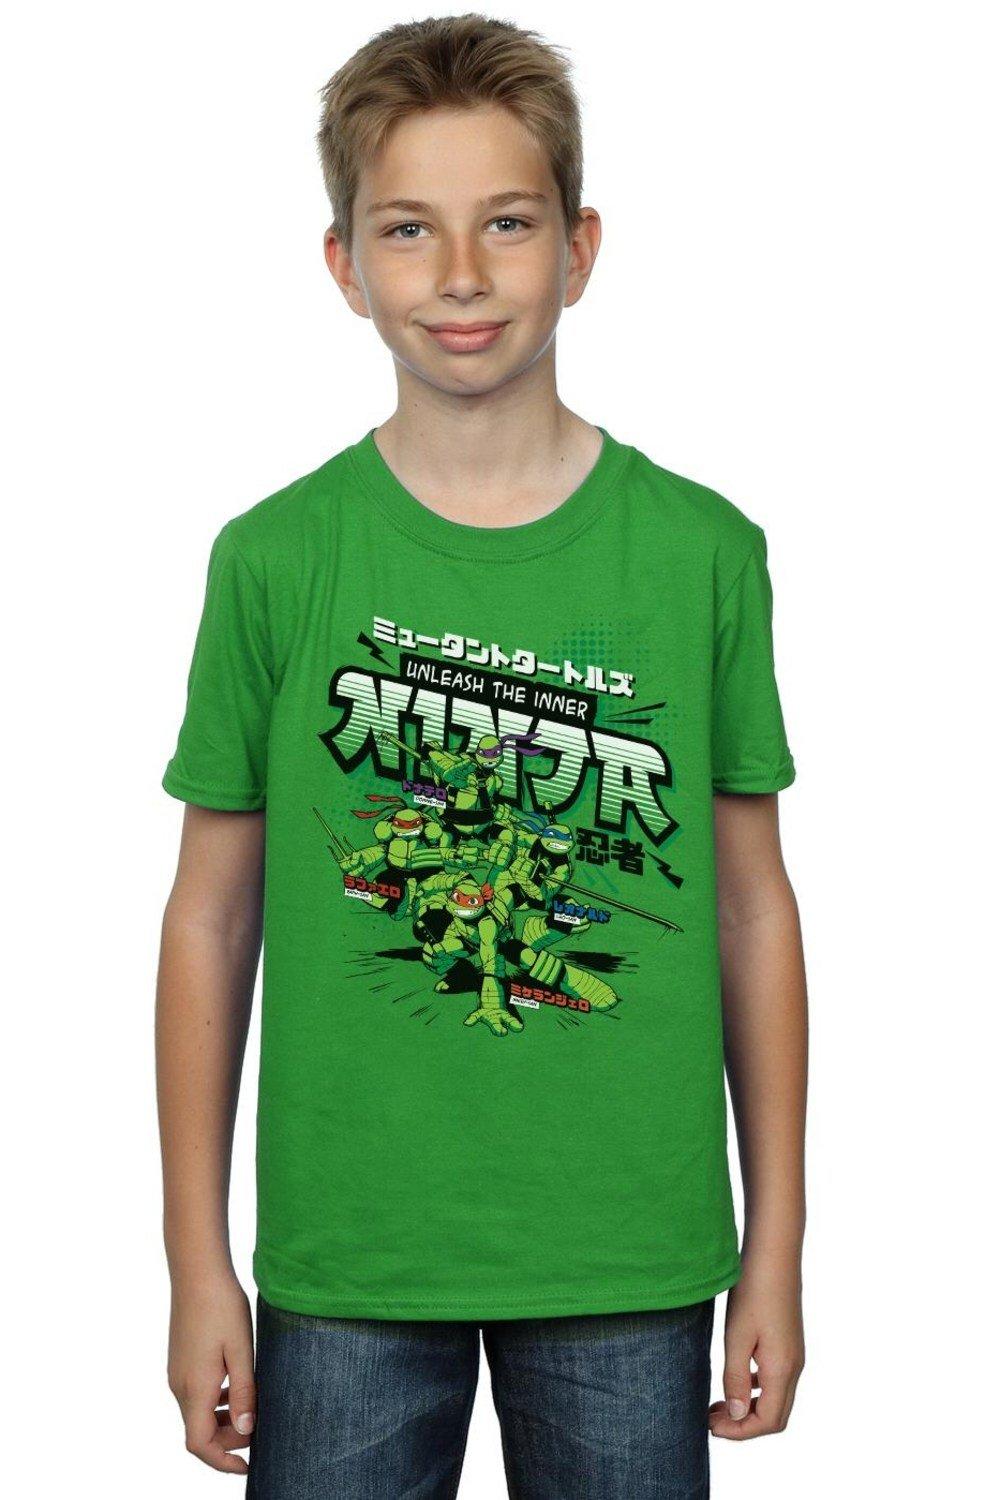 Unleash The Inner Ninja T-Shirt